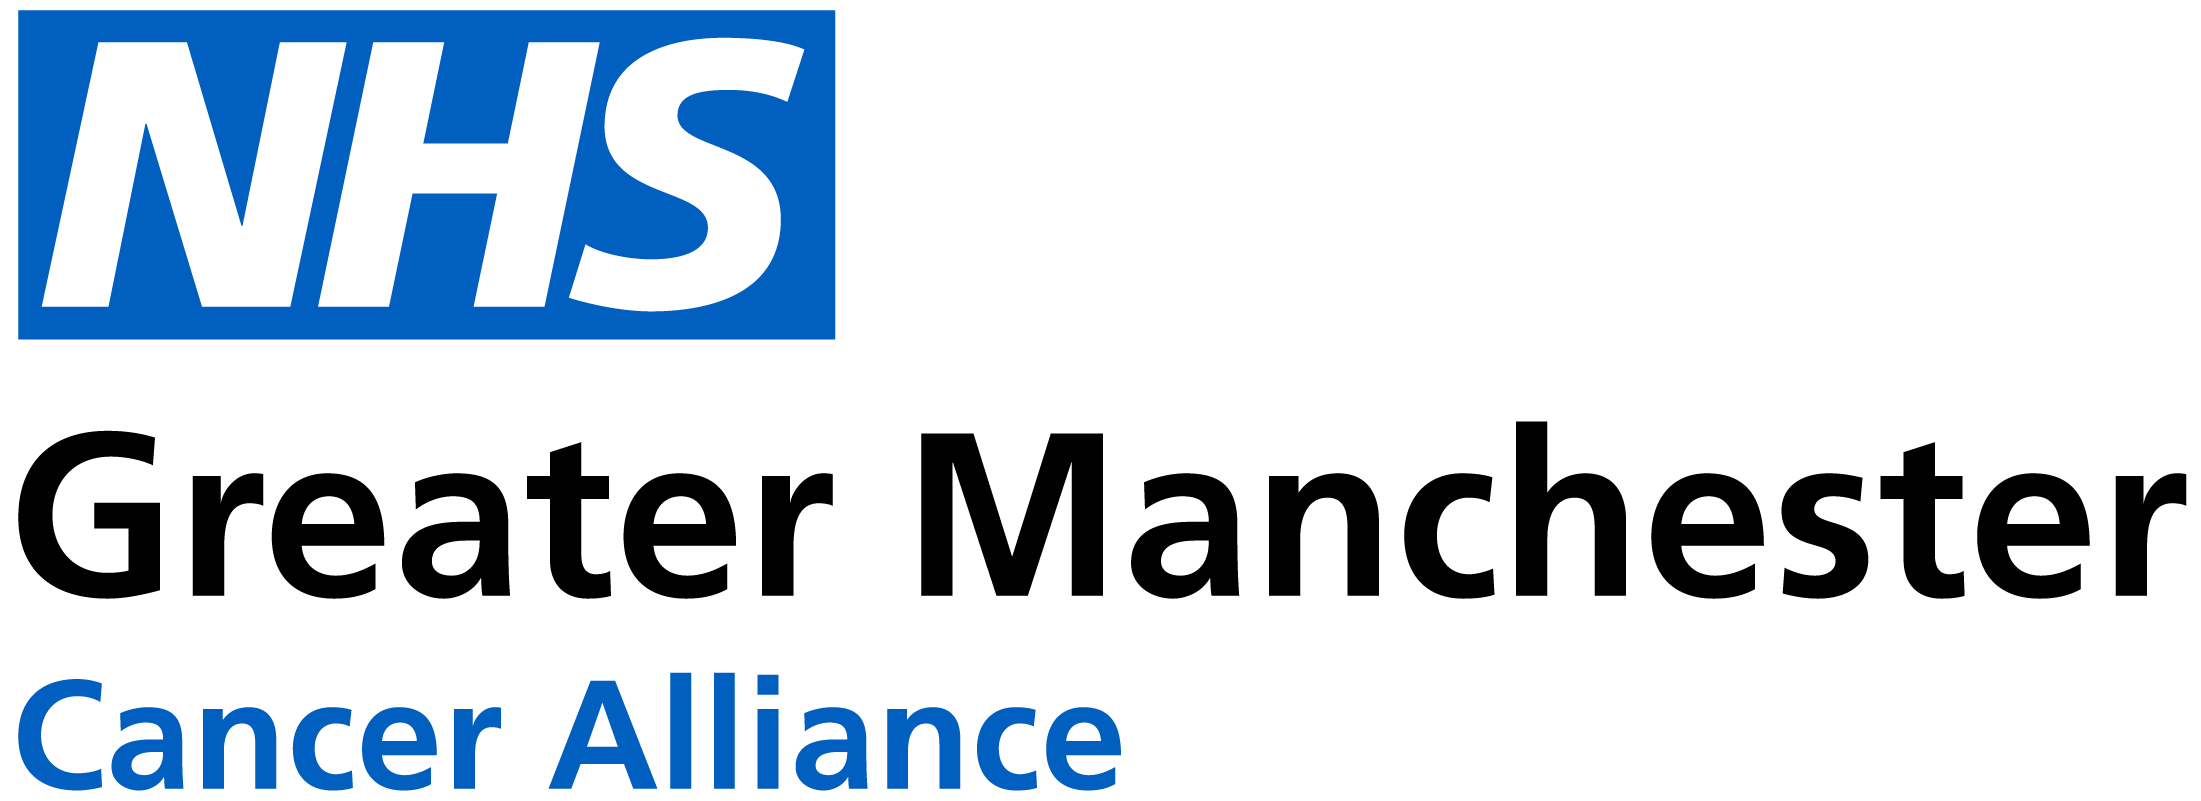 NHS Greater Manchester Cancer Alliance Logo